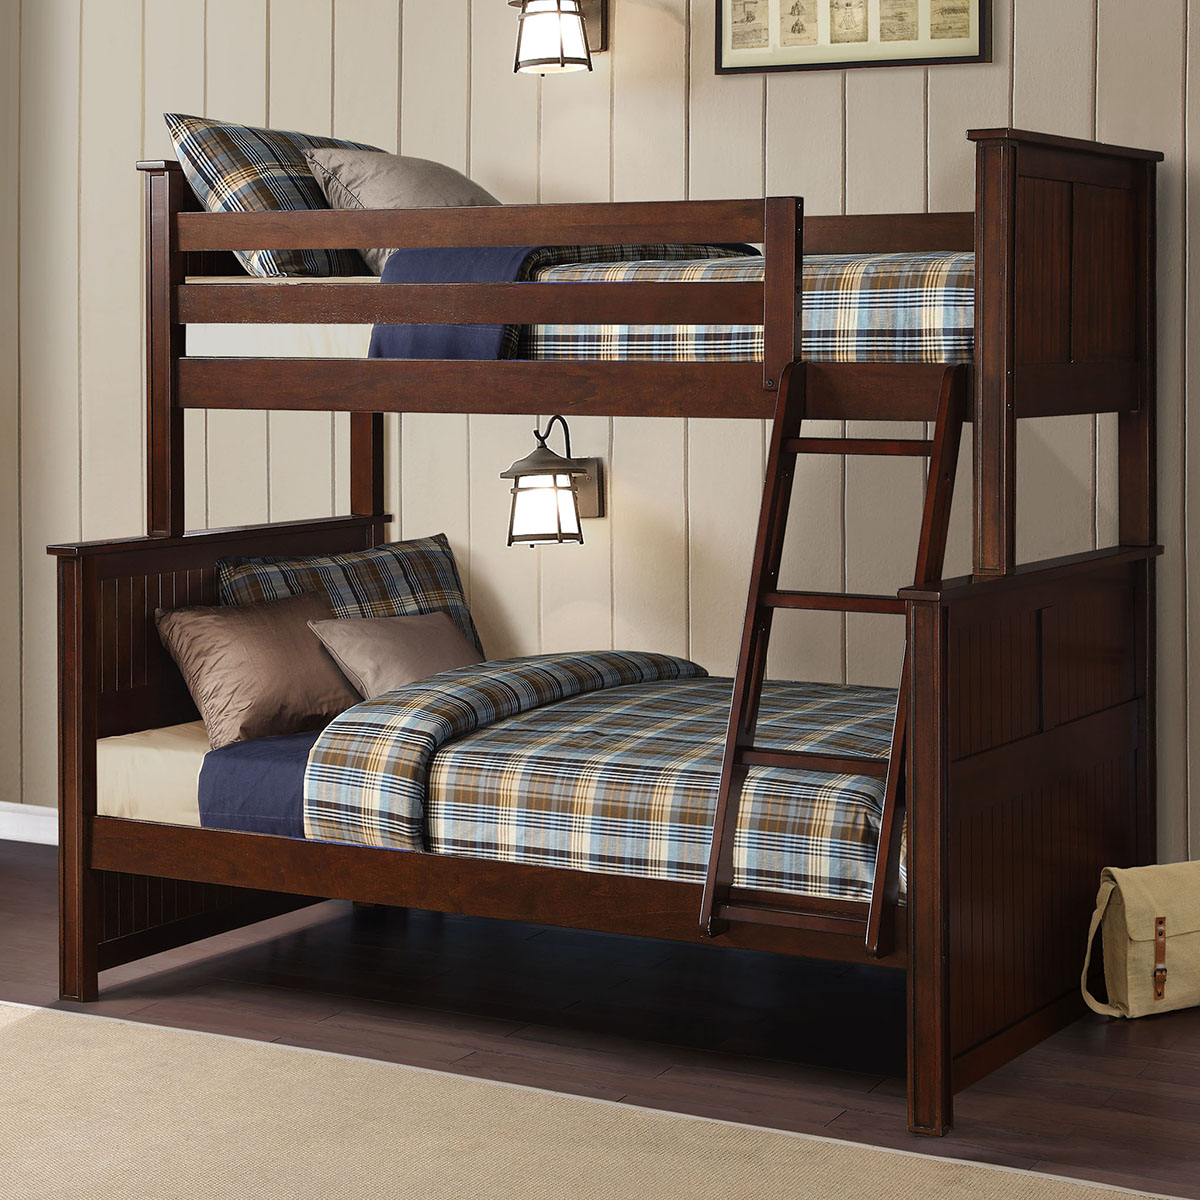 bayside furnishings bunk bed